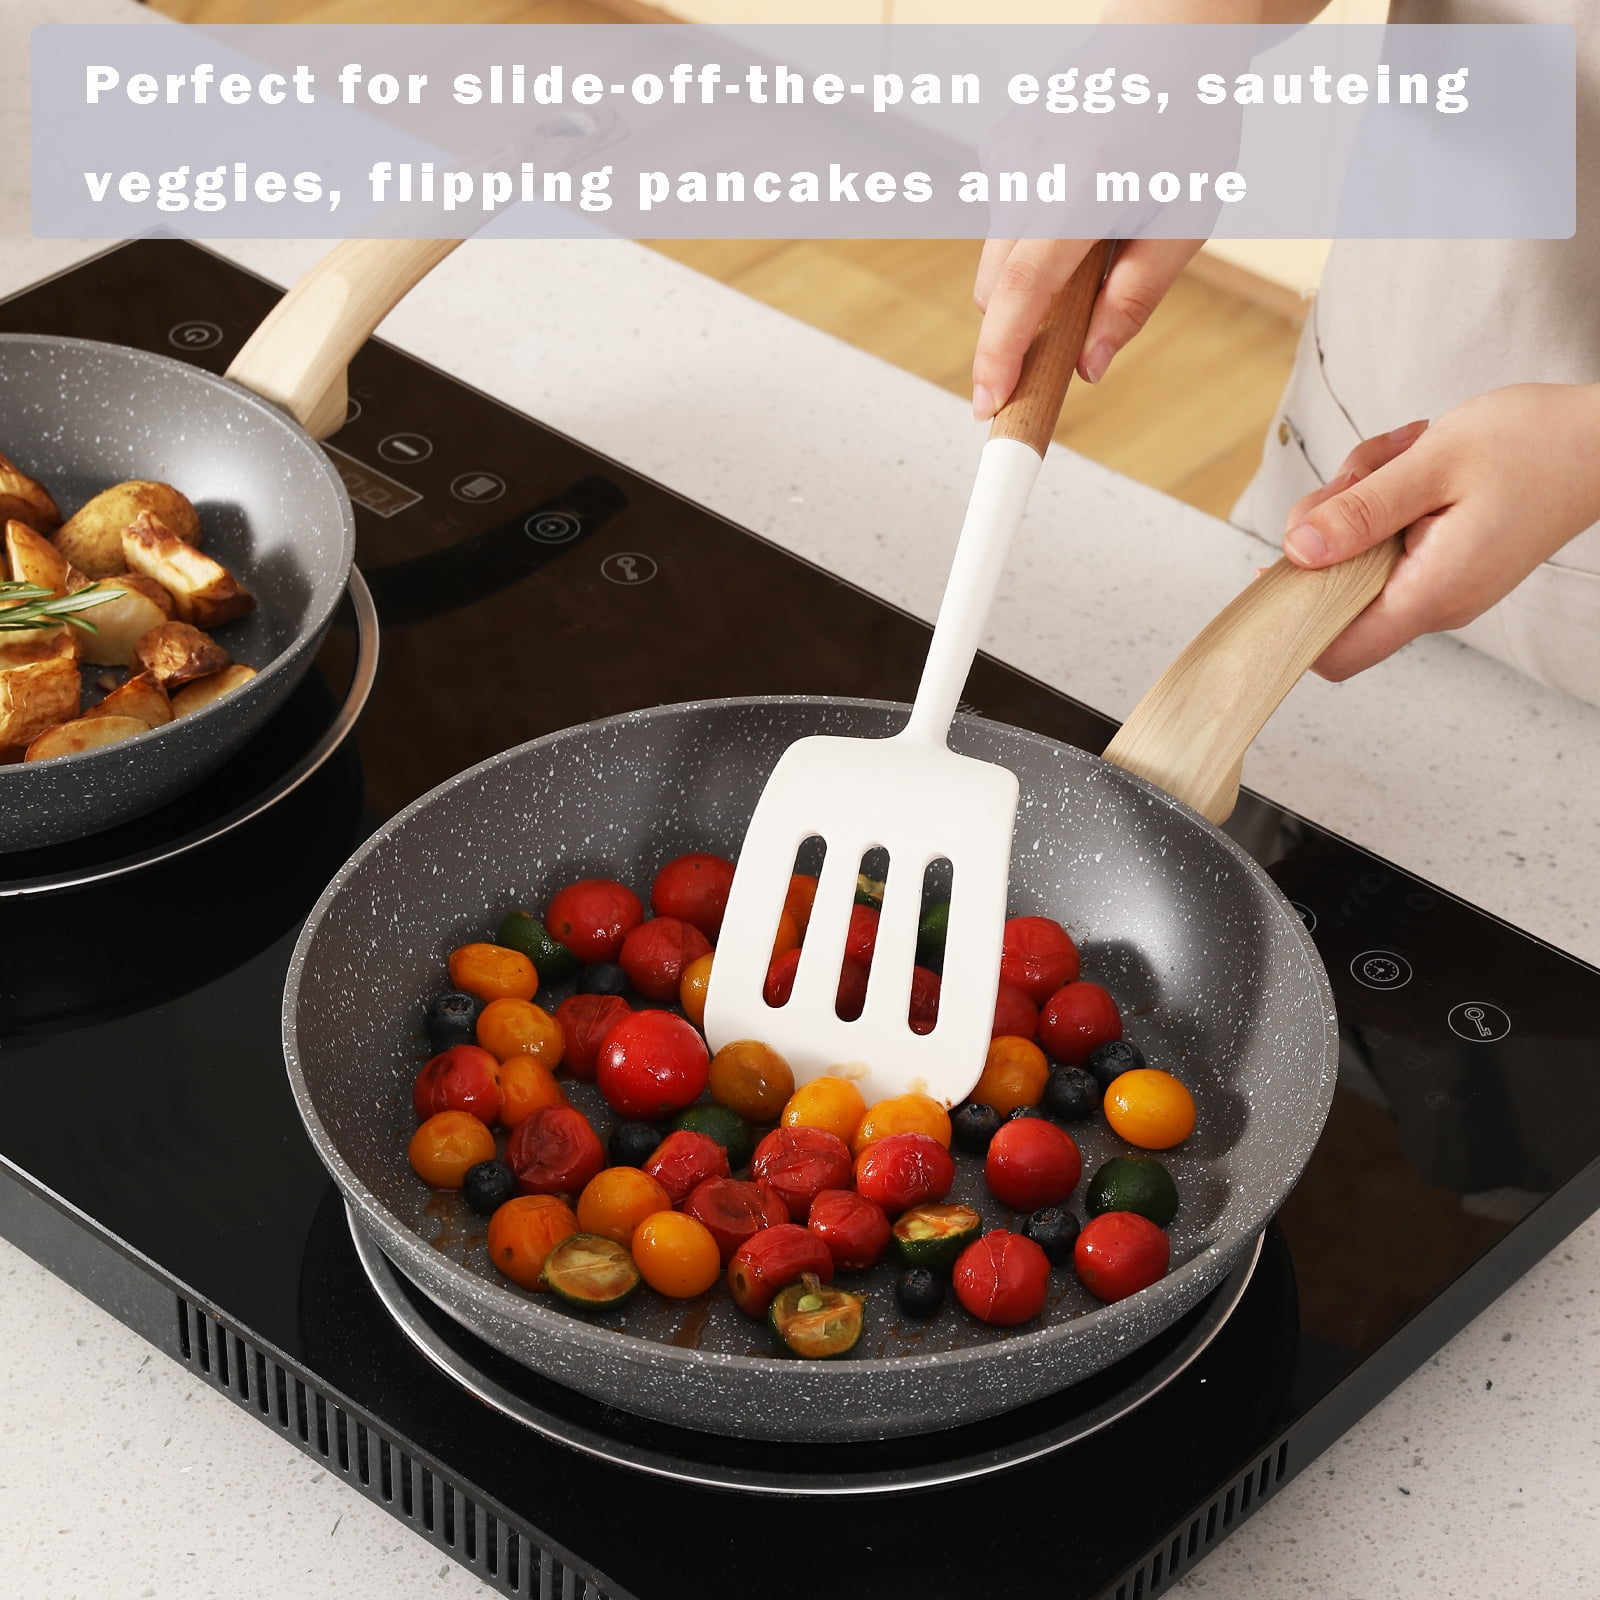 Vkoocy Nonstick Pots and Pans Set, 6 Pcs Black Granite Induction Kitchen Cookware Sets